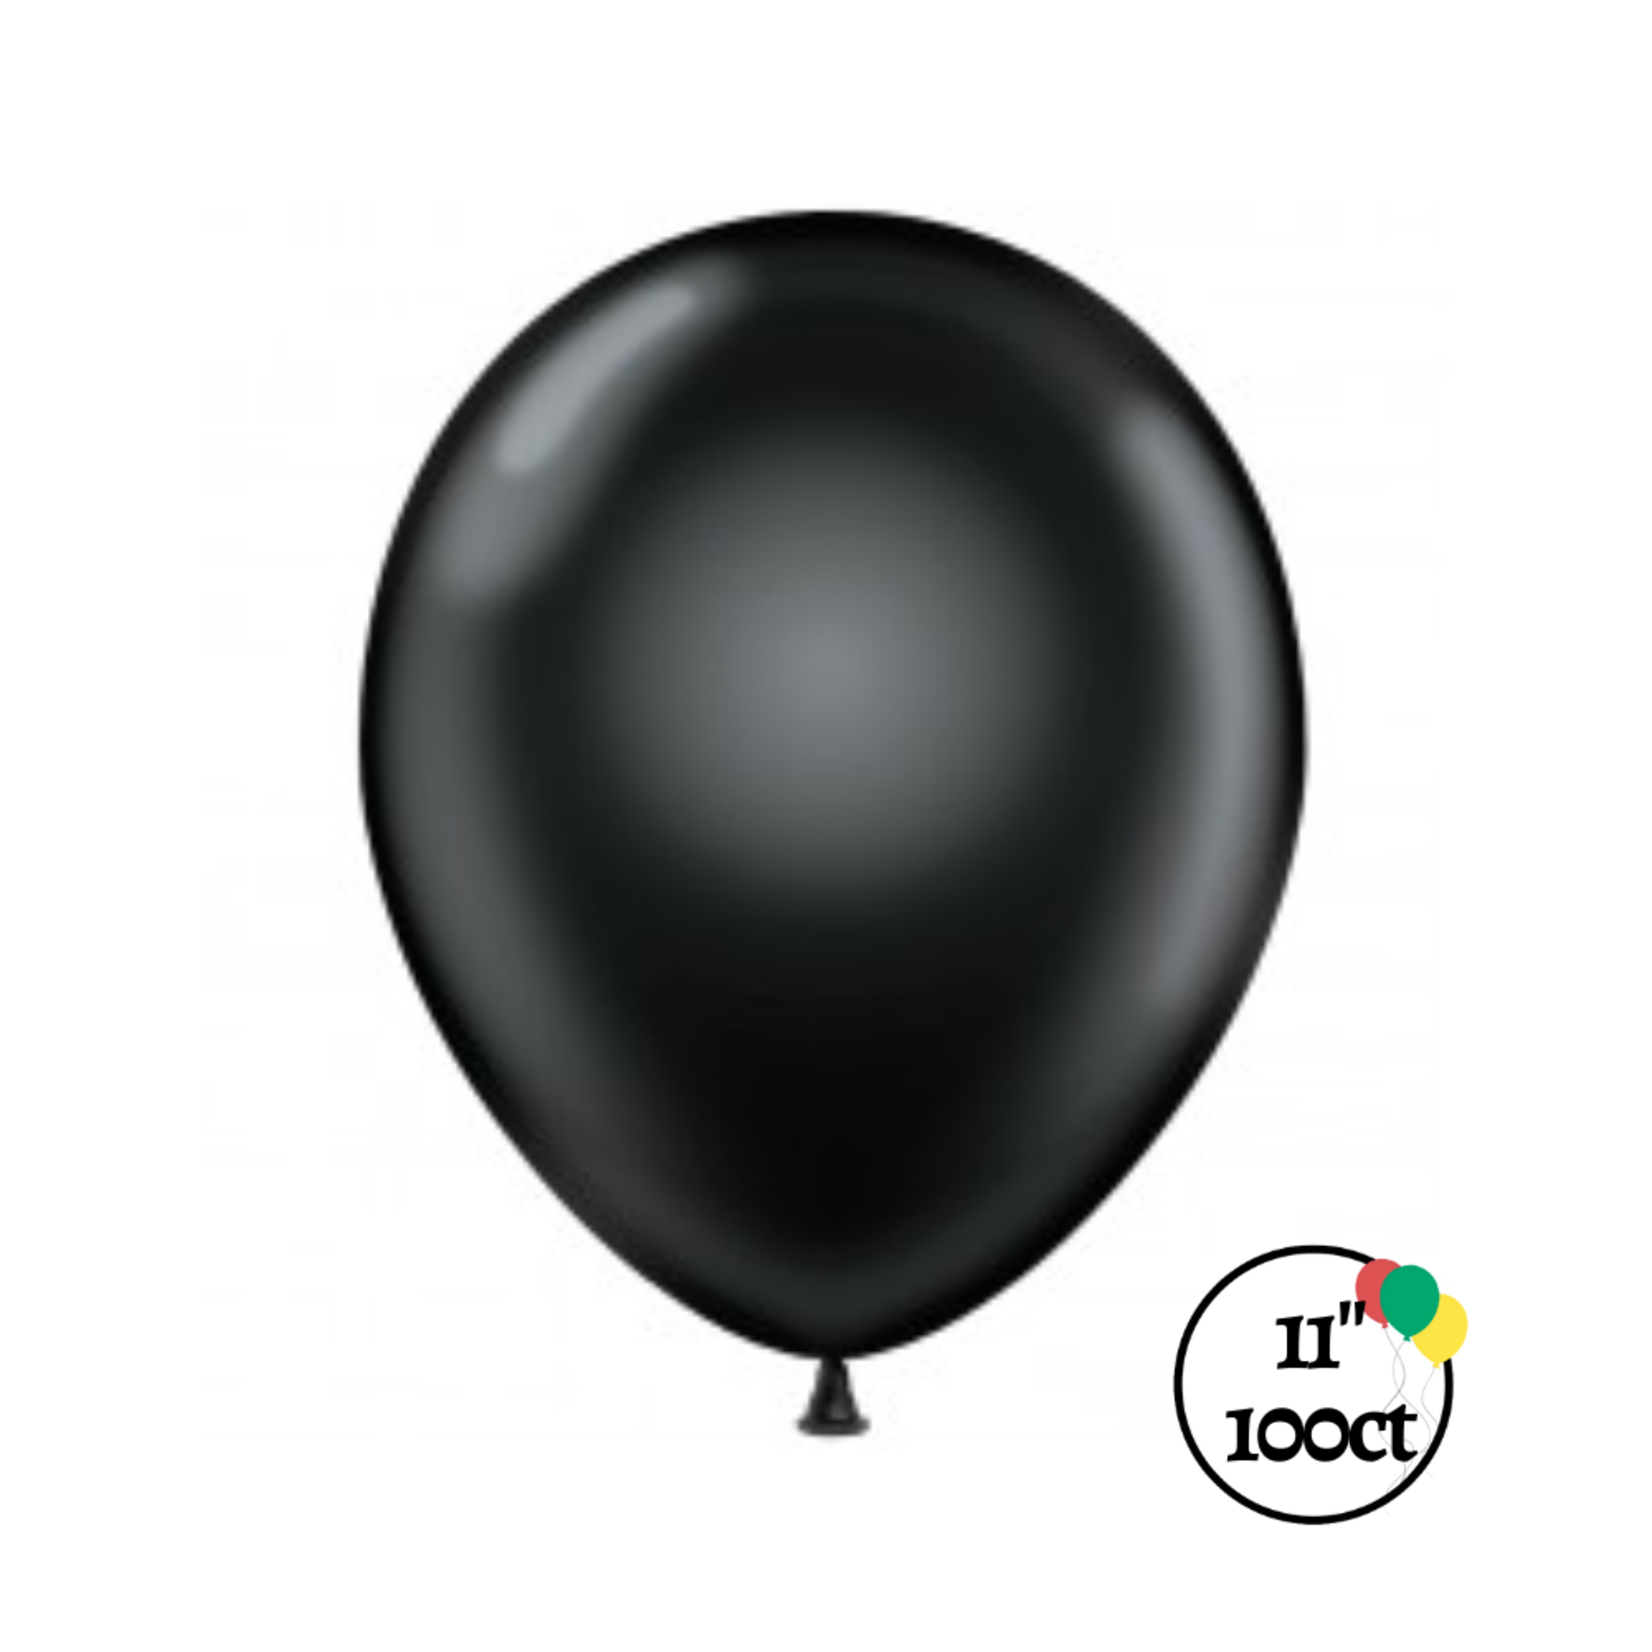 Tuftex 11" Tuftex Black 100ct Balloon